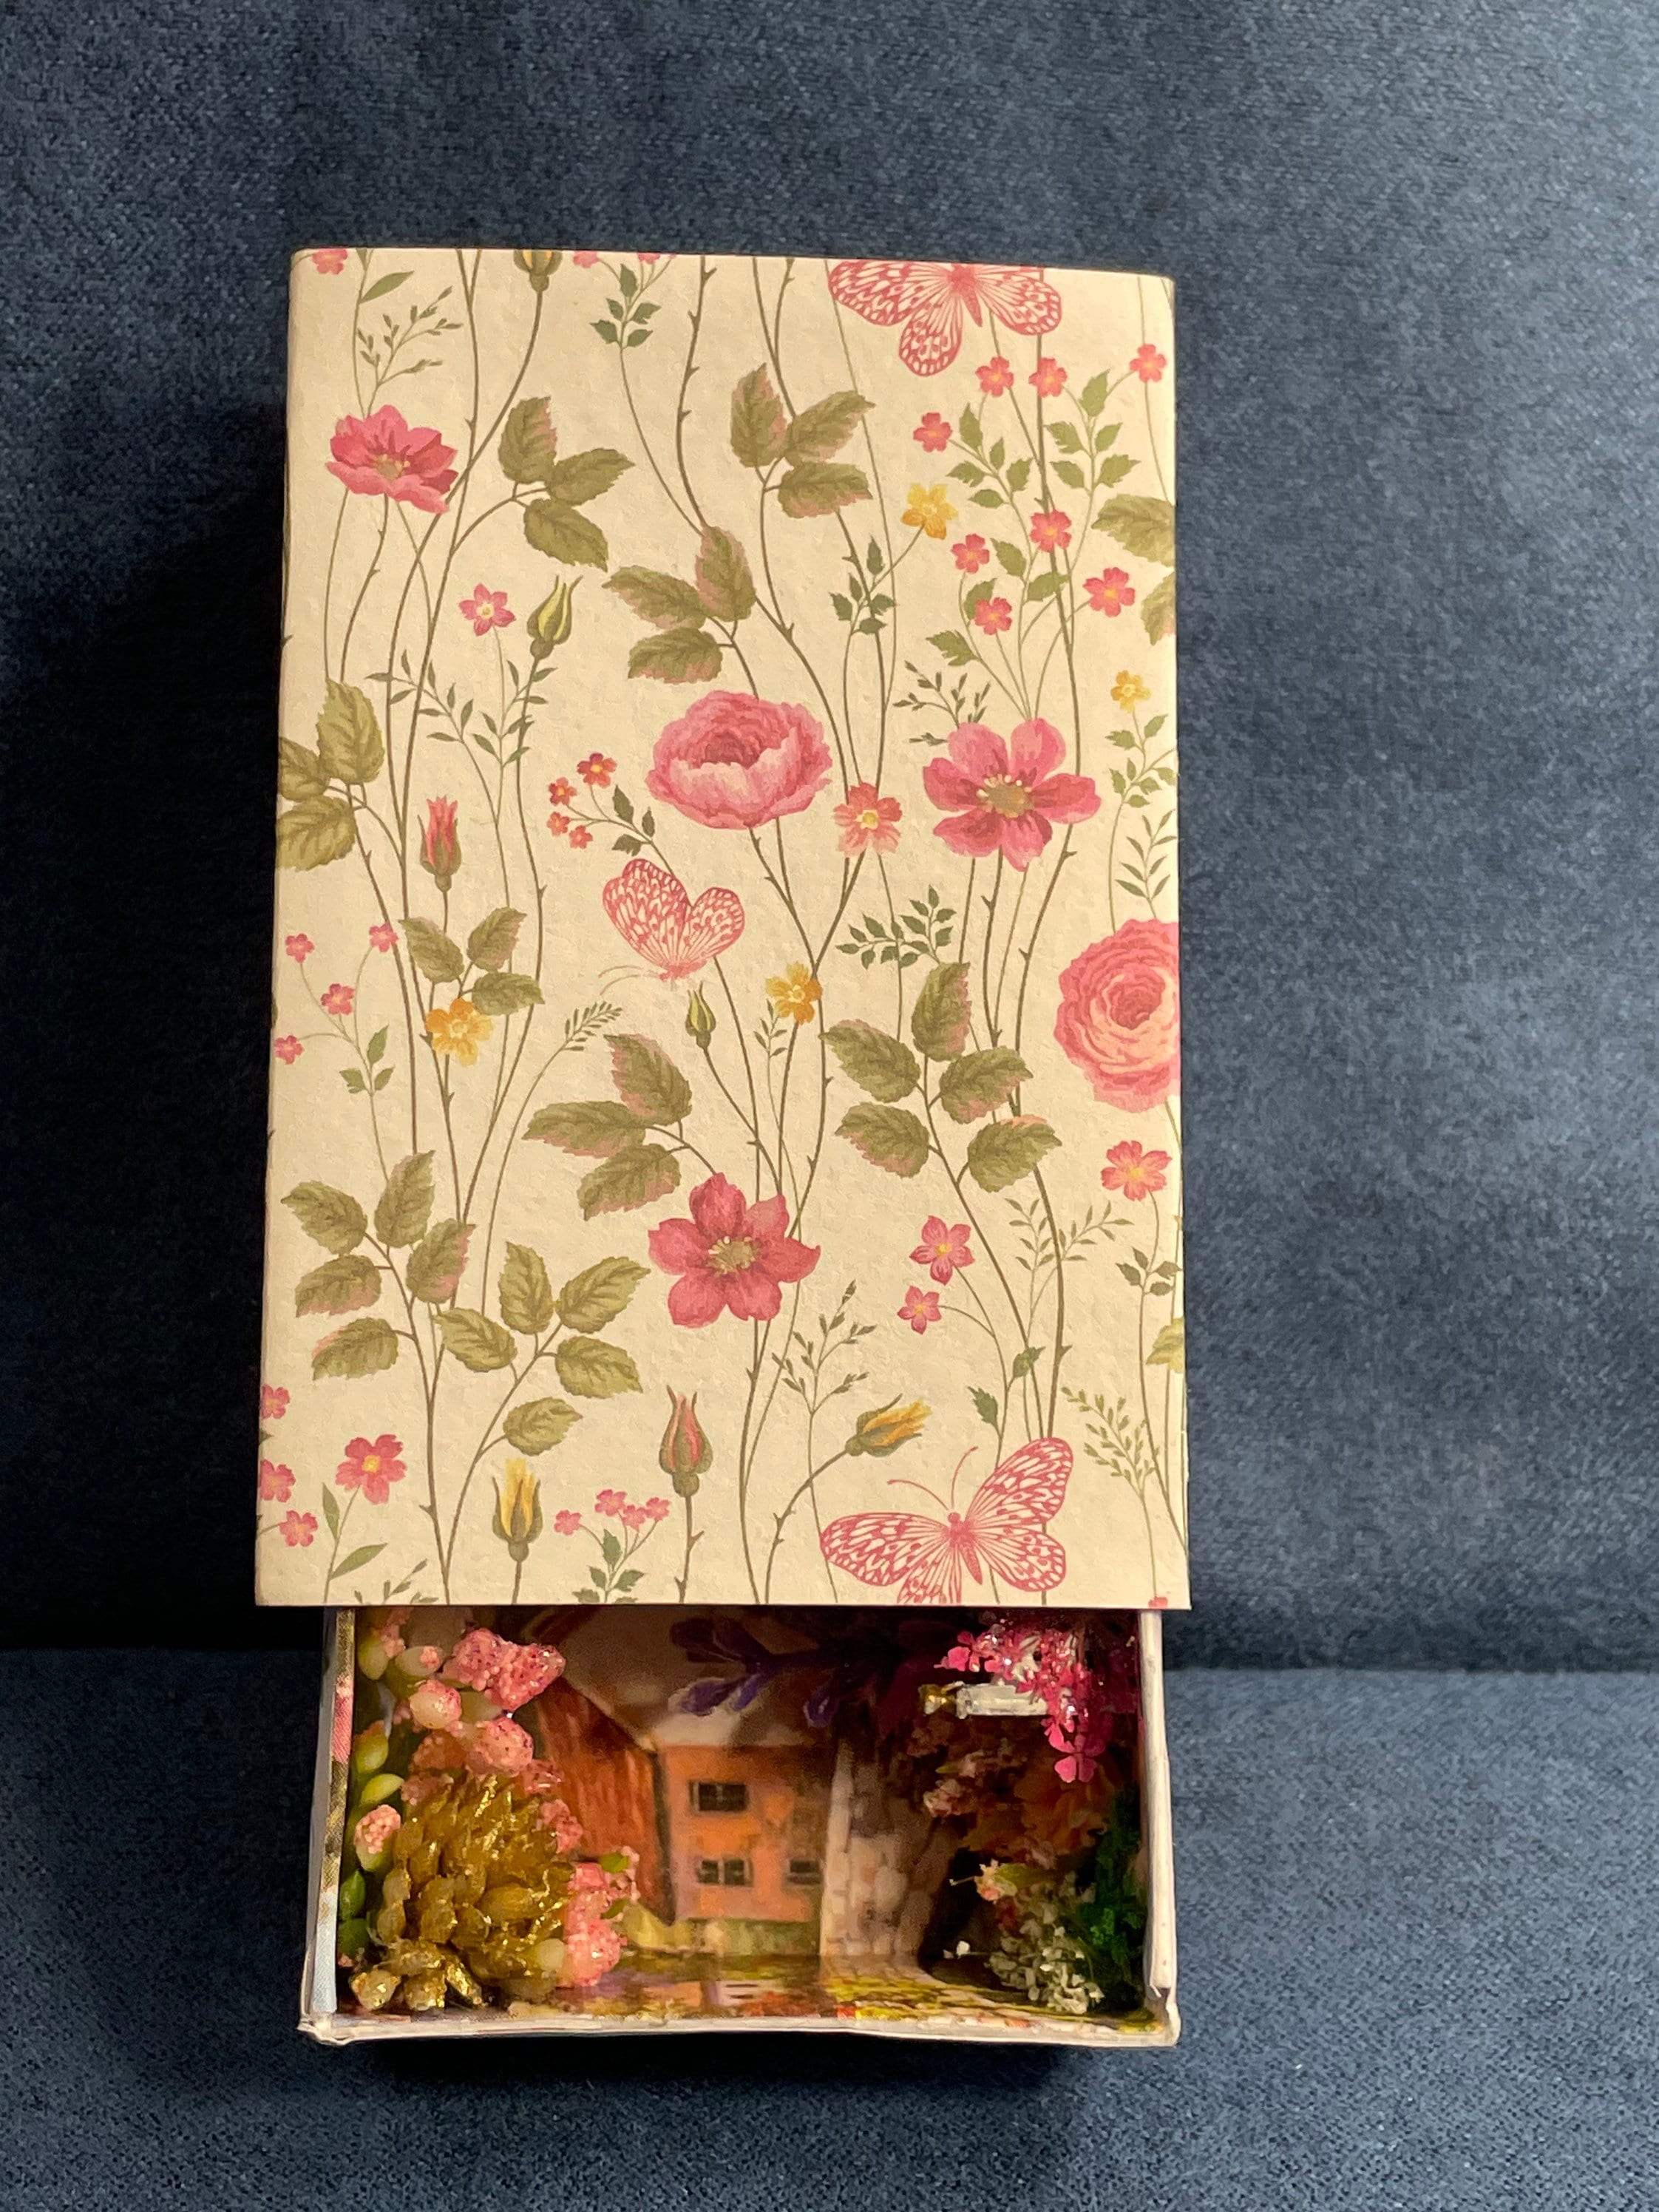 Making miniature flowers: We talk to Gosia Suchodolska - Hobbies and Crafts